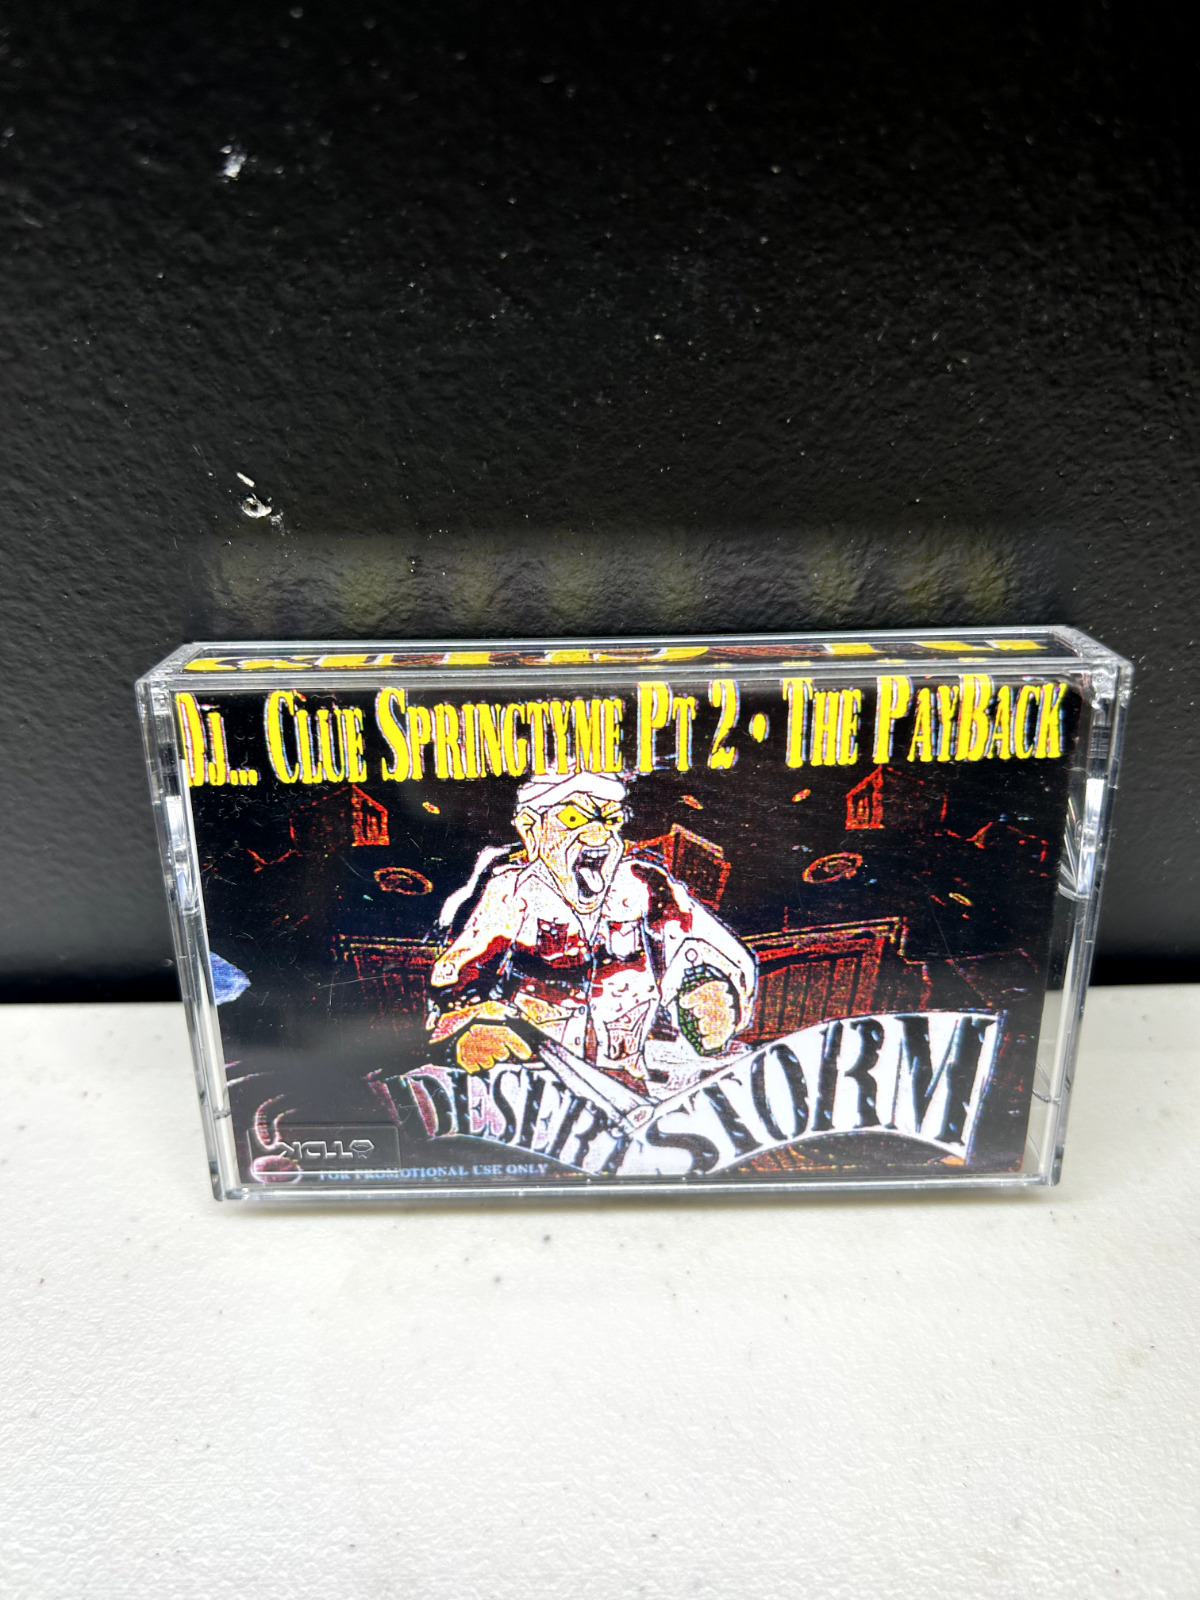 RARE DJ CLUE SPRINGTYME PT.2 THE PAYBACK 1996 90S NYC PROMO MIXTAPE CASETTE TAPE